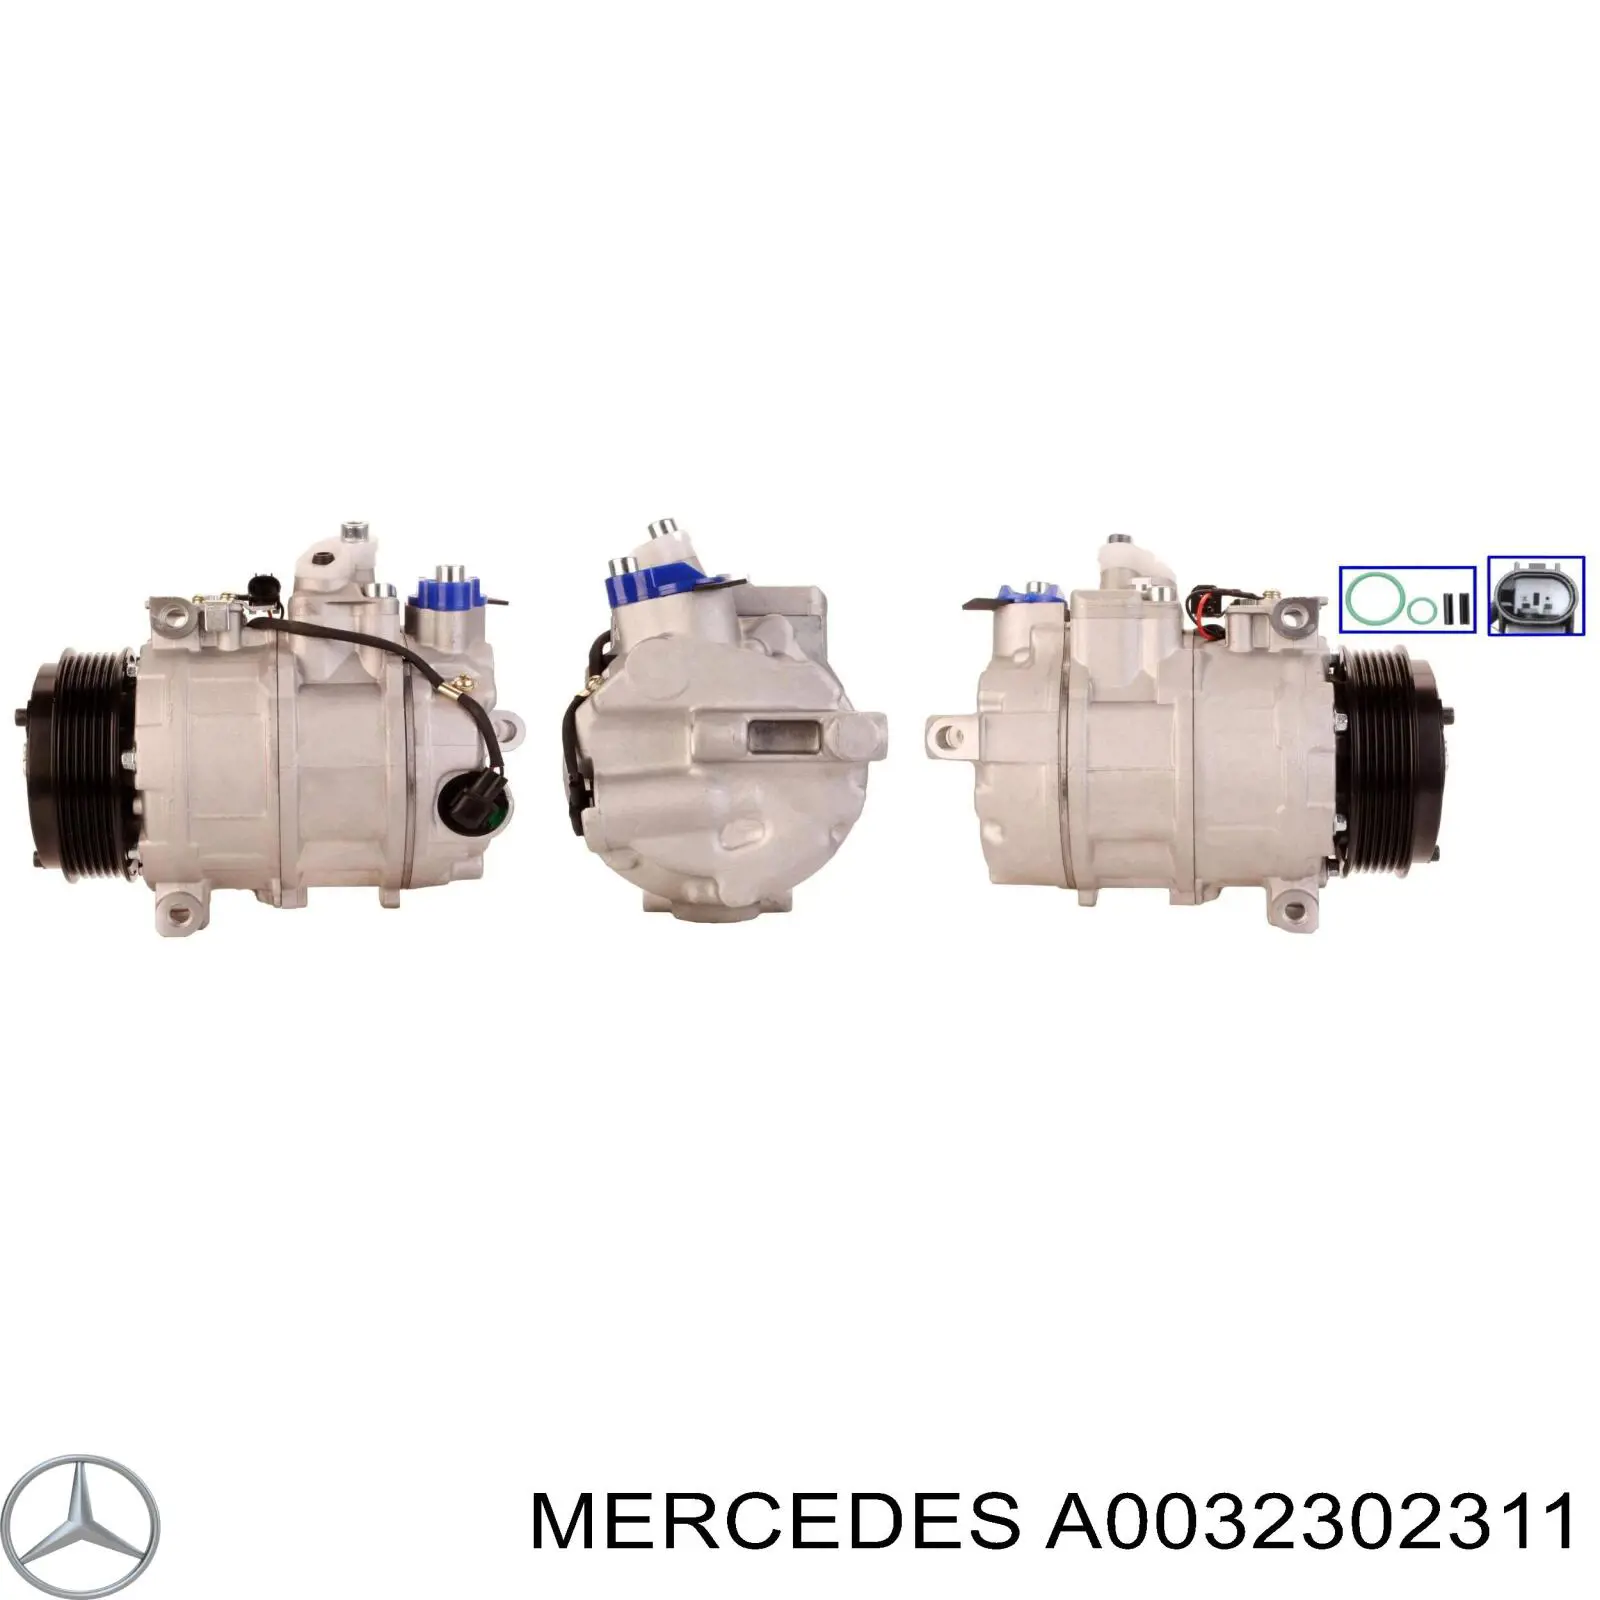 A0032302311 Mercedes compresor de aire acondicionado